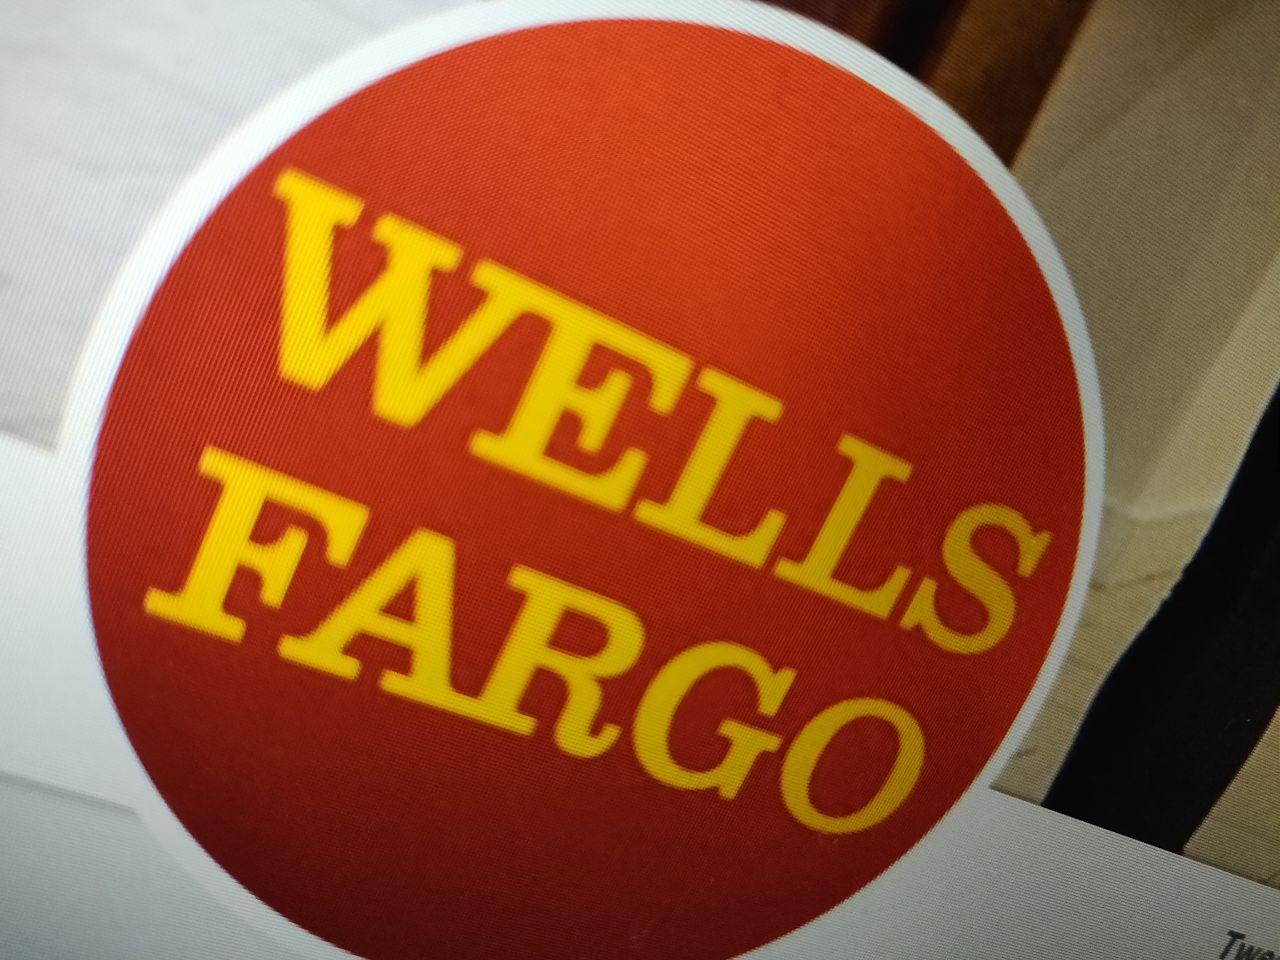 [App & website not working] Wells Fargo website app down and not working, online / mobile banking suffers - what happened?